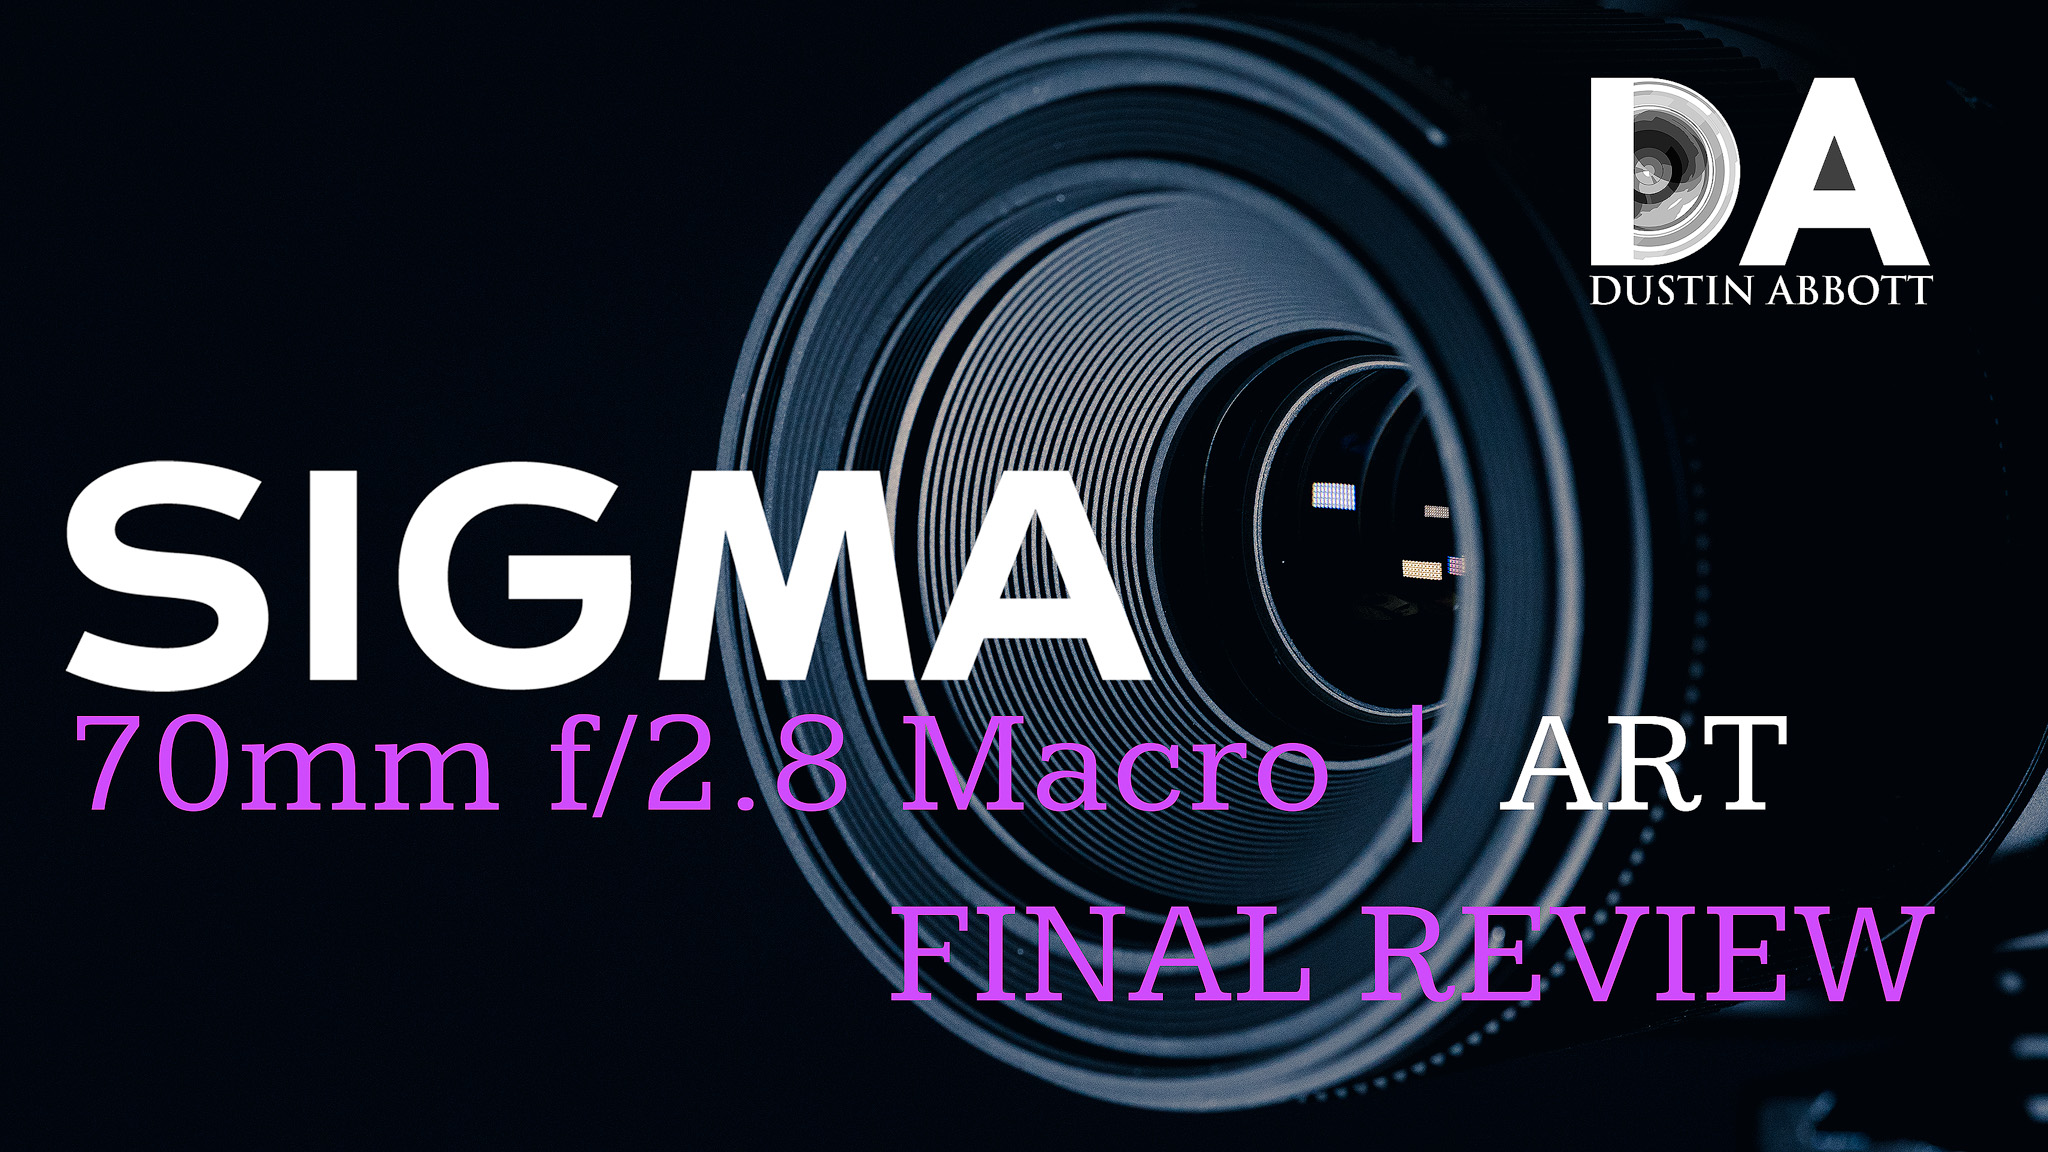 Sigma 70mm f/2.8 Macro ART Review - DustinAbbott.net